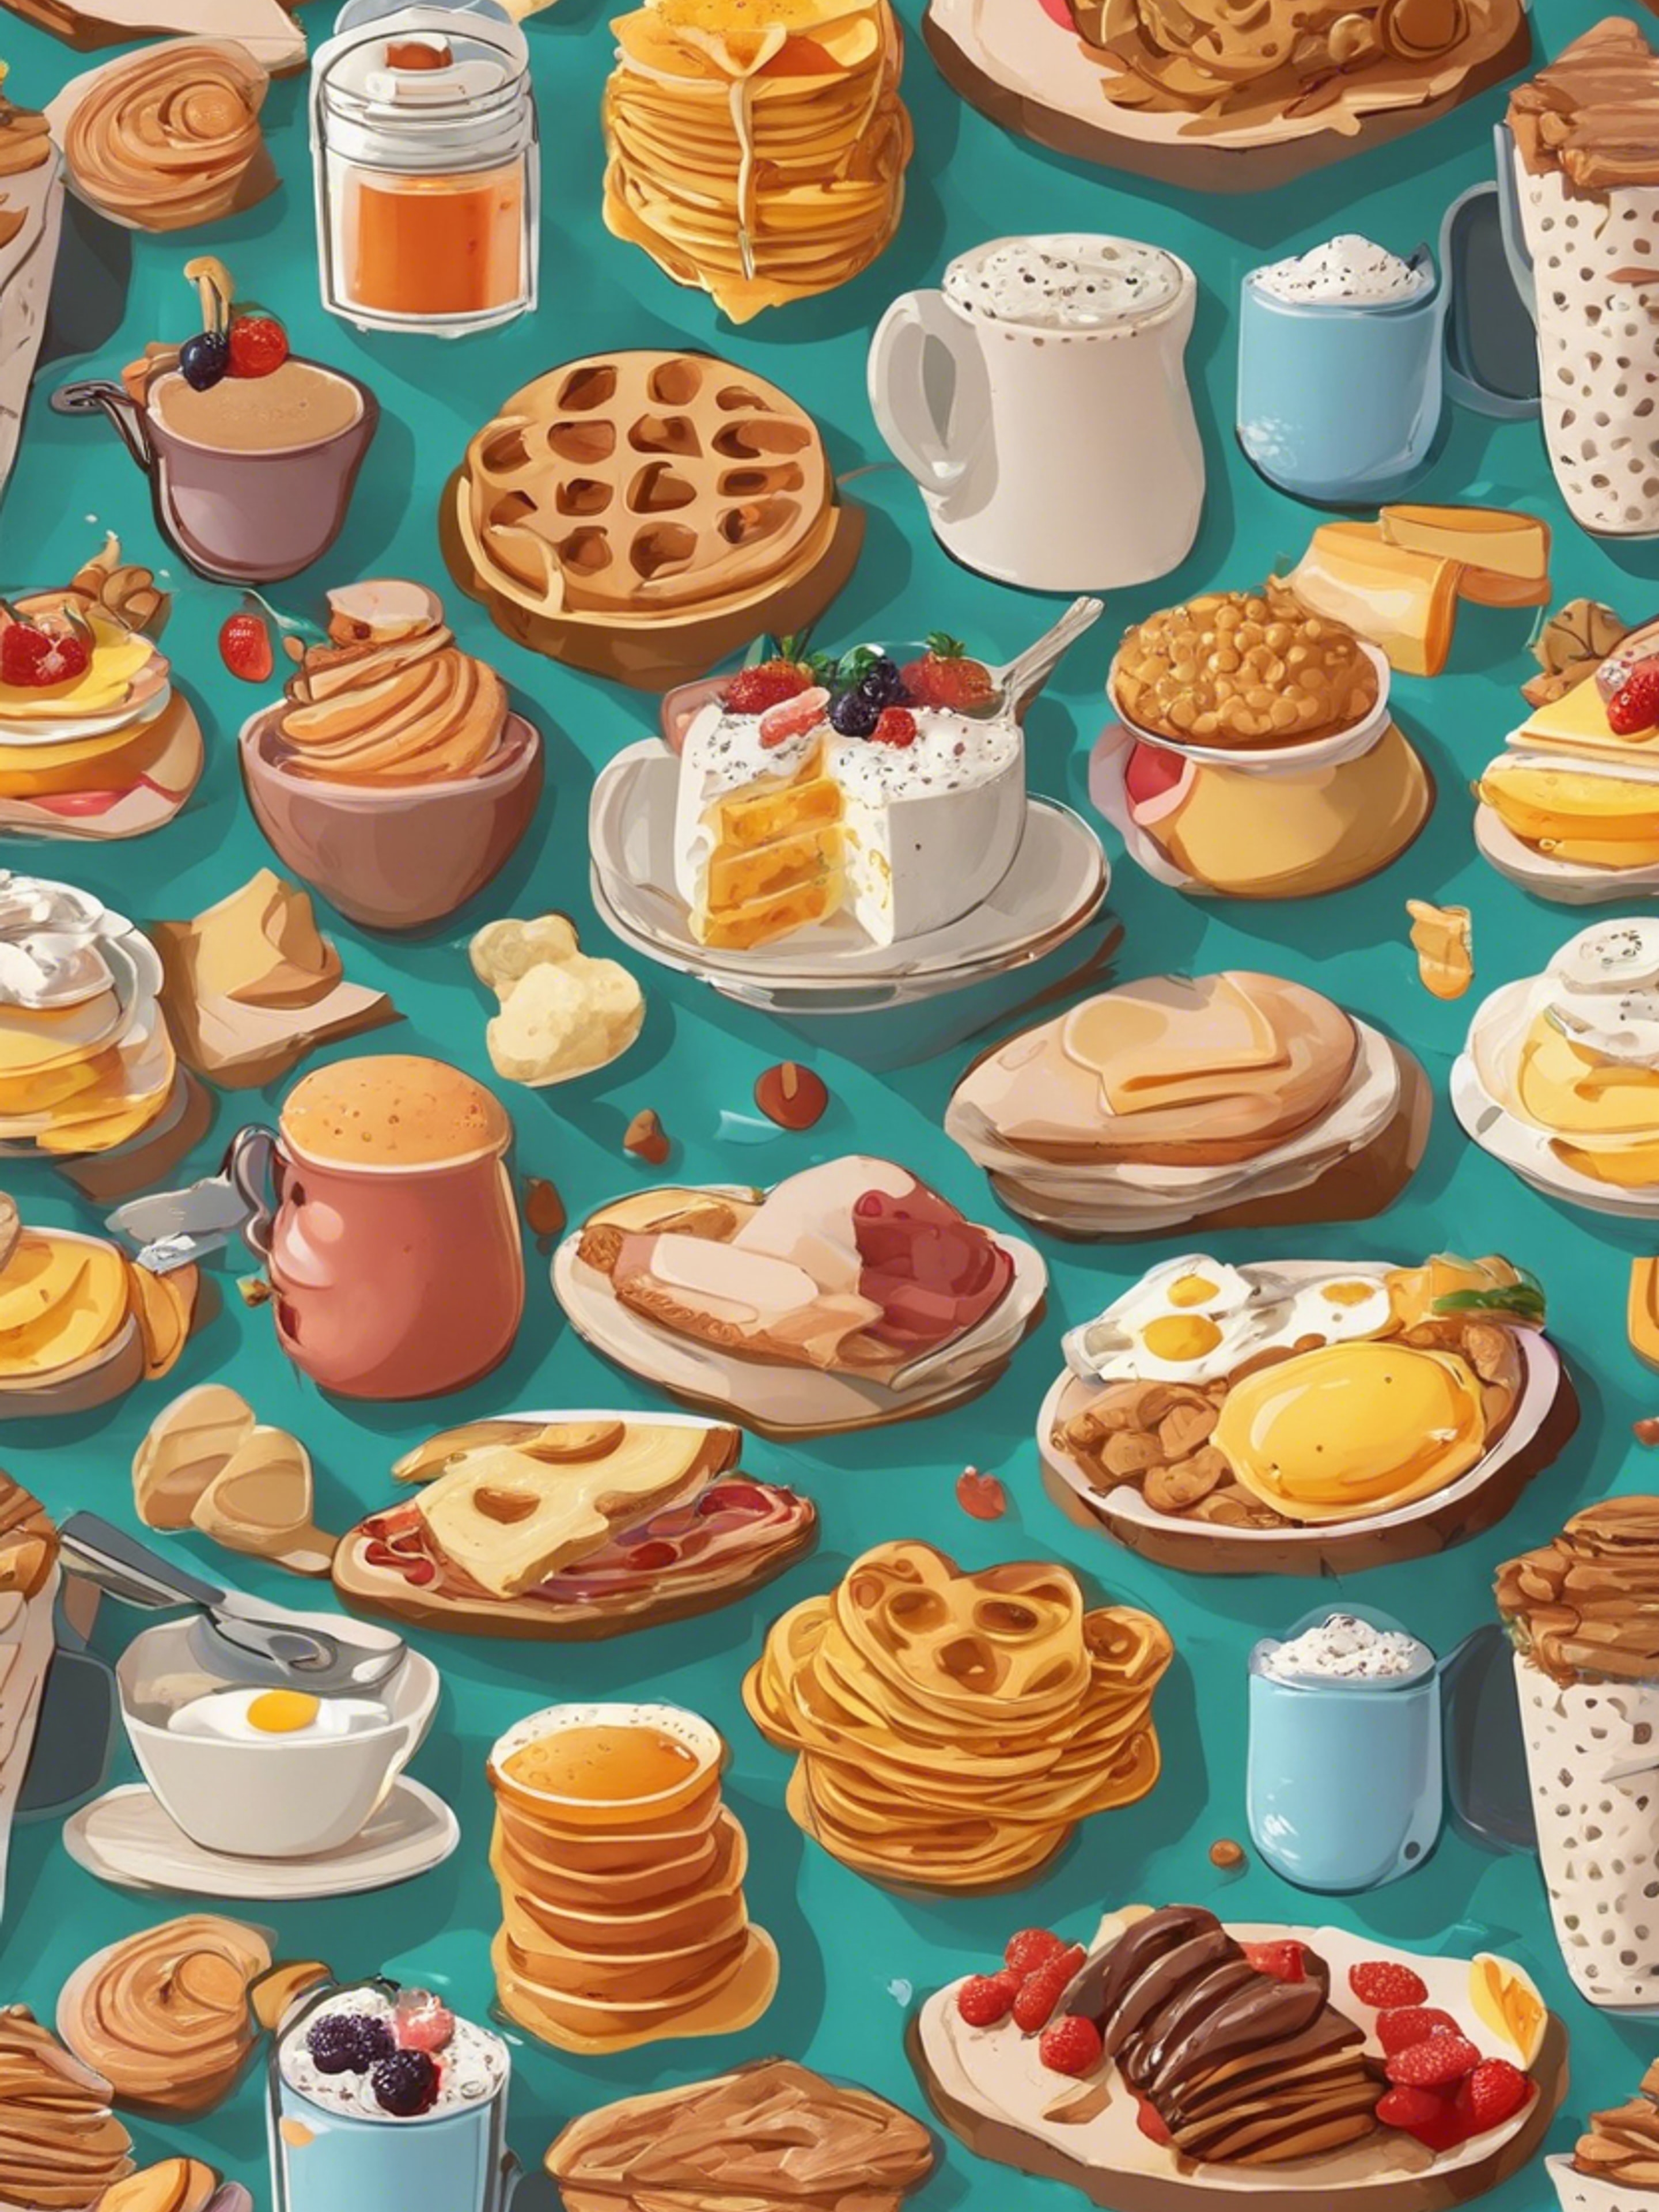 Cartoonish breakfast food items in an appealing, kid-friendly pattern. טפט[fa493d8b255444e69f8d]